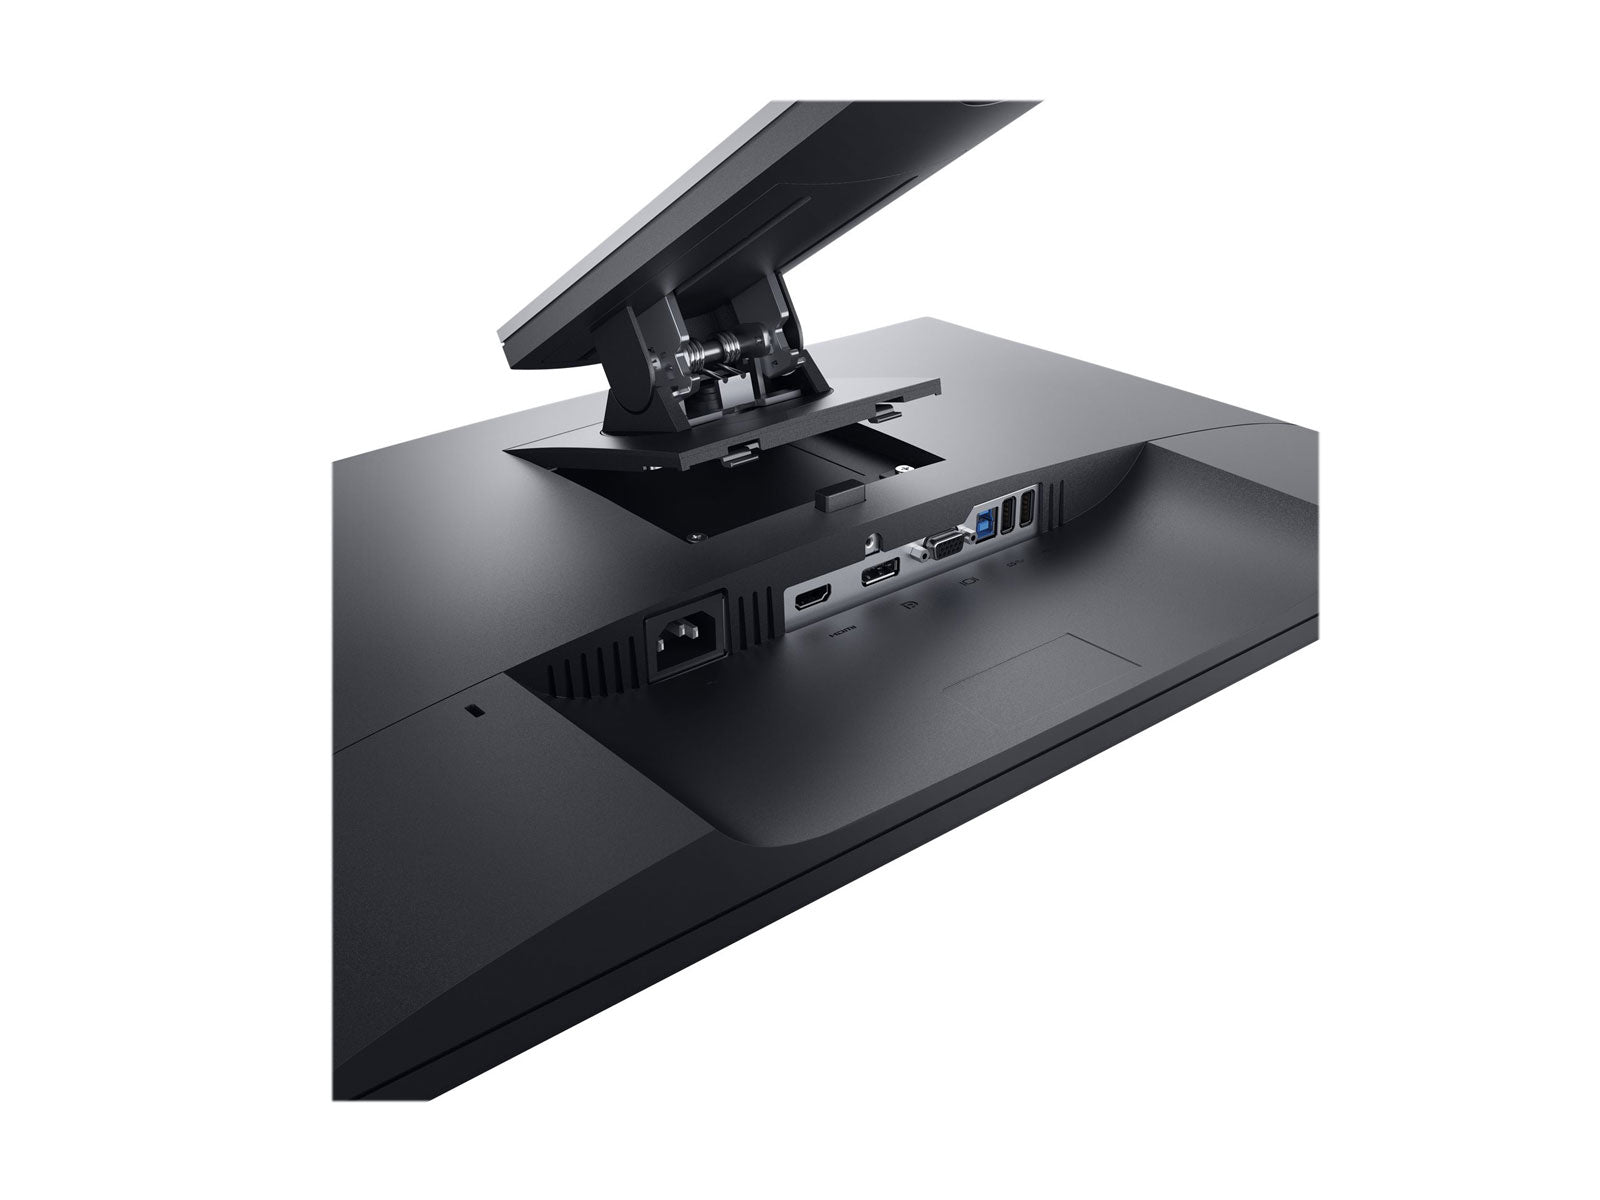 Dell P2418HZ 24" FHD 1920 x 1080 Video Conferencing LED Display Monitor Monitors.com 